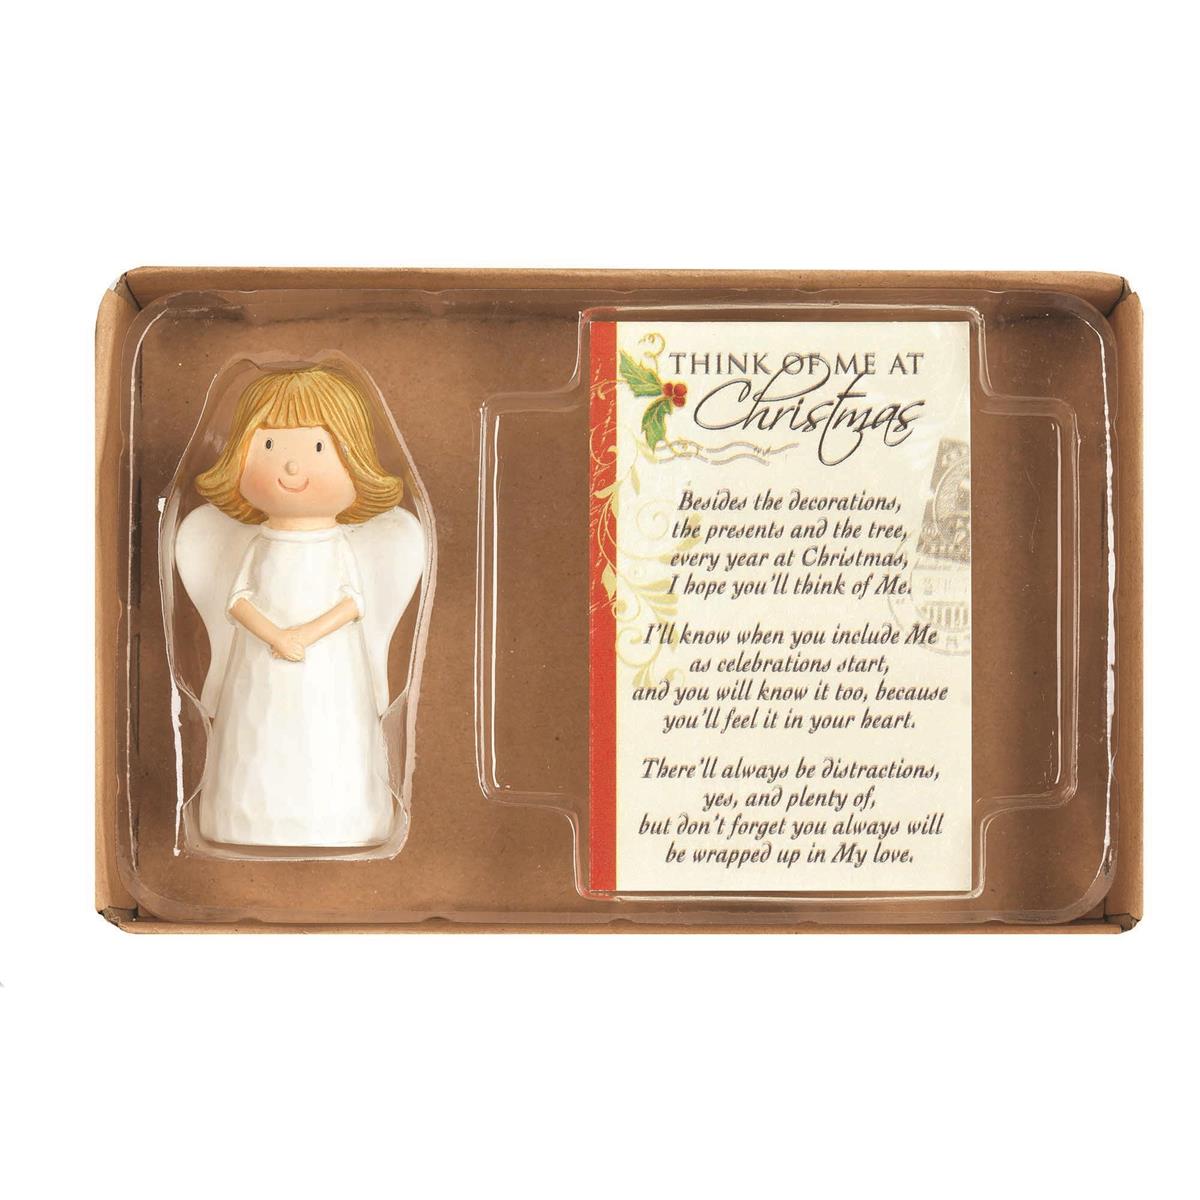 https://shop.catholicsupply.com/Shared/Images/Product/Think-of-Me-at-Christmas-Angel-Gift-Set/119508.jpg